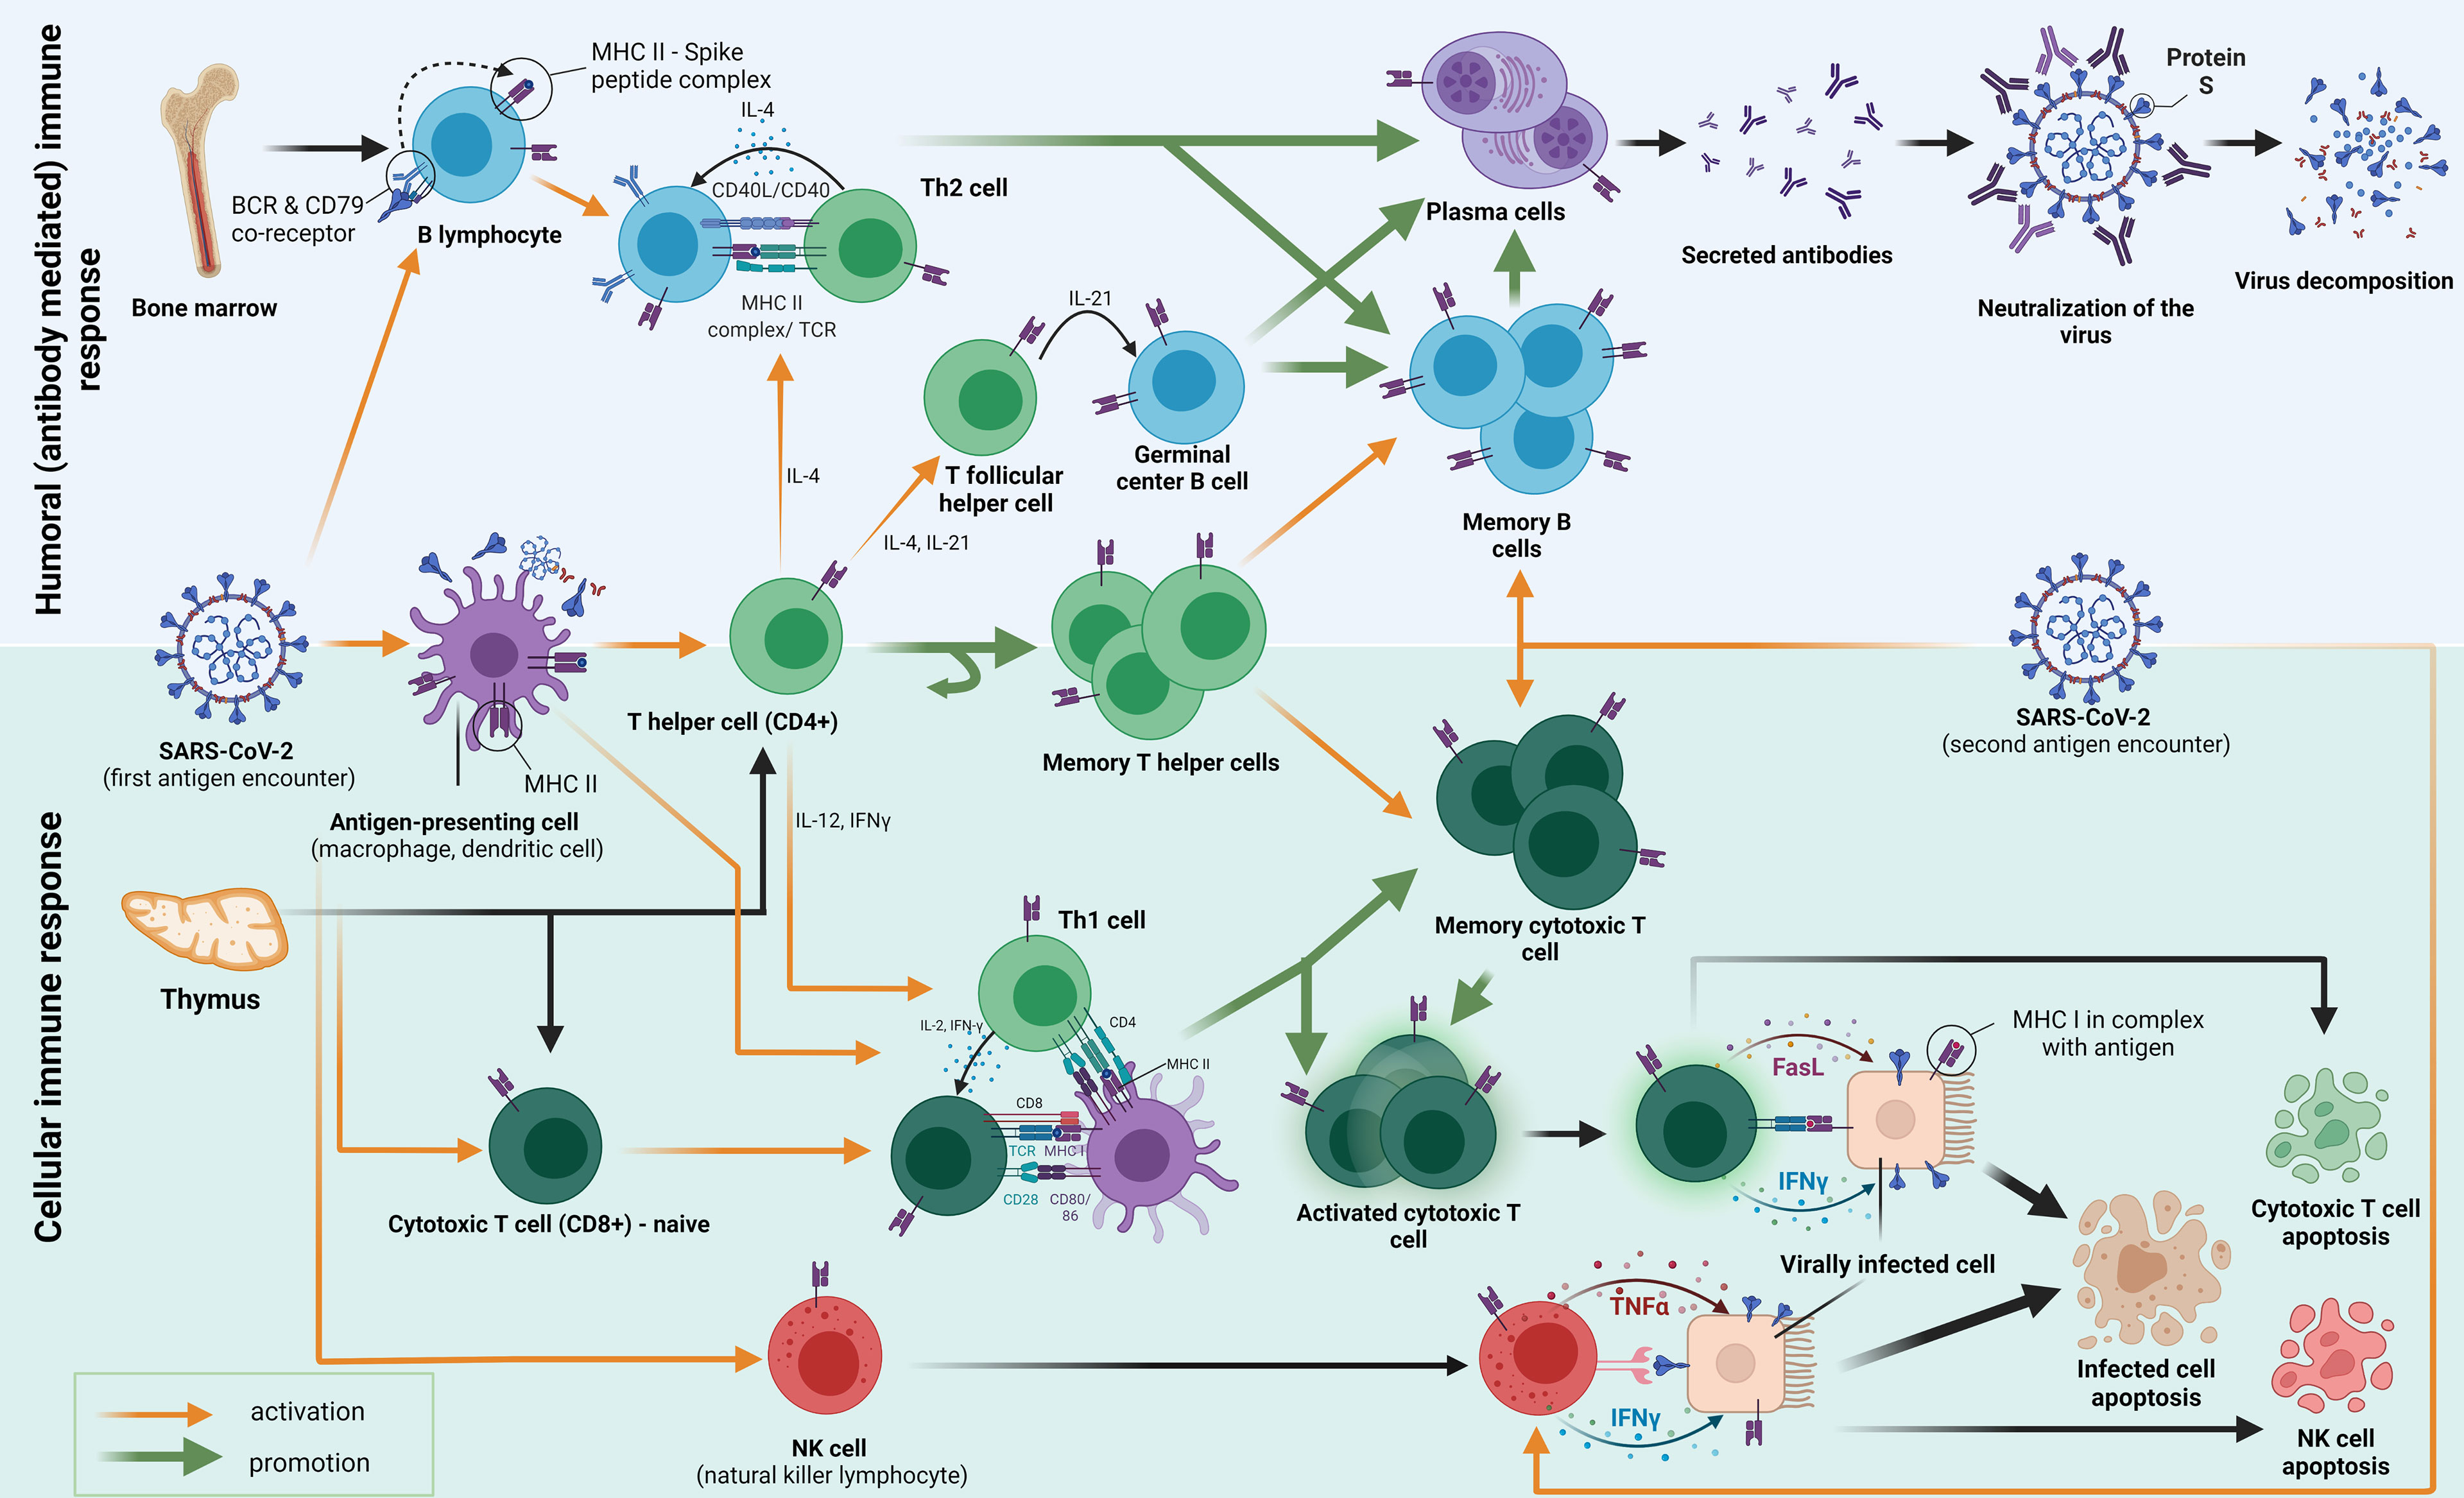 Immune system response